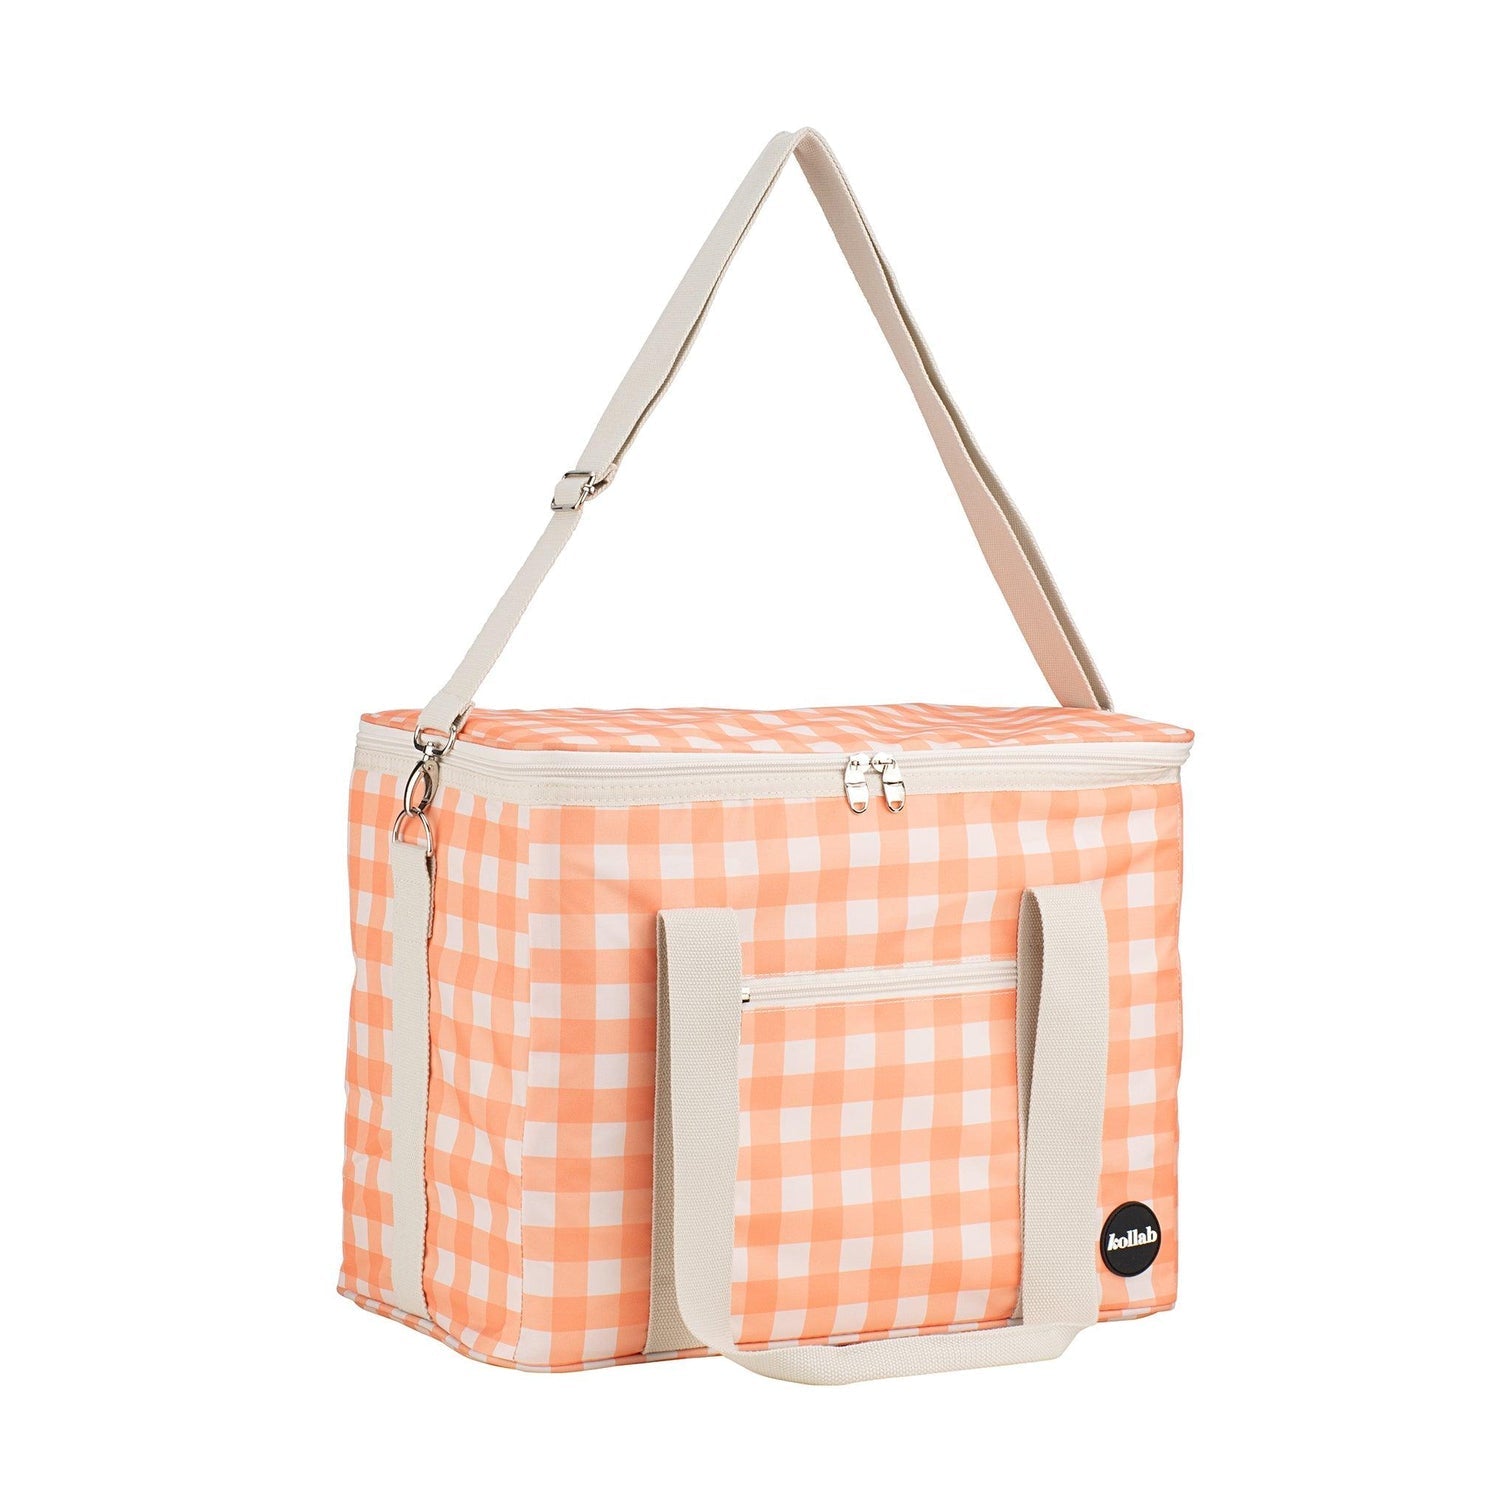 Picnic Bag Apricot Check-Travel & Outdoors-Kollab-The Bay Room